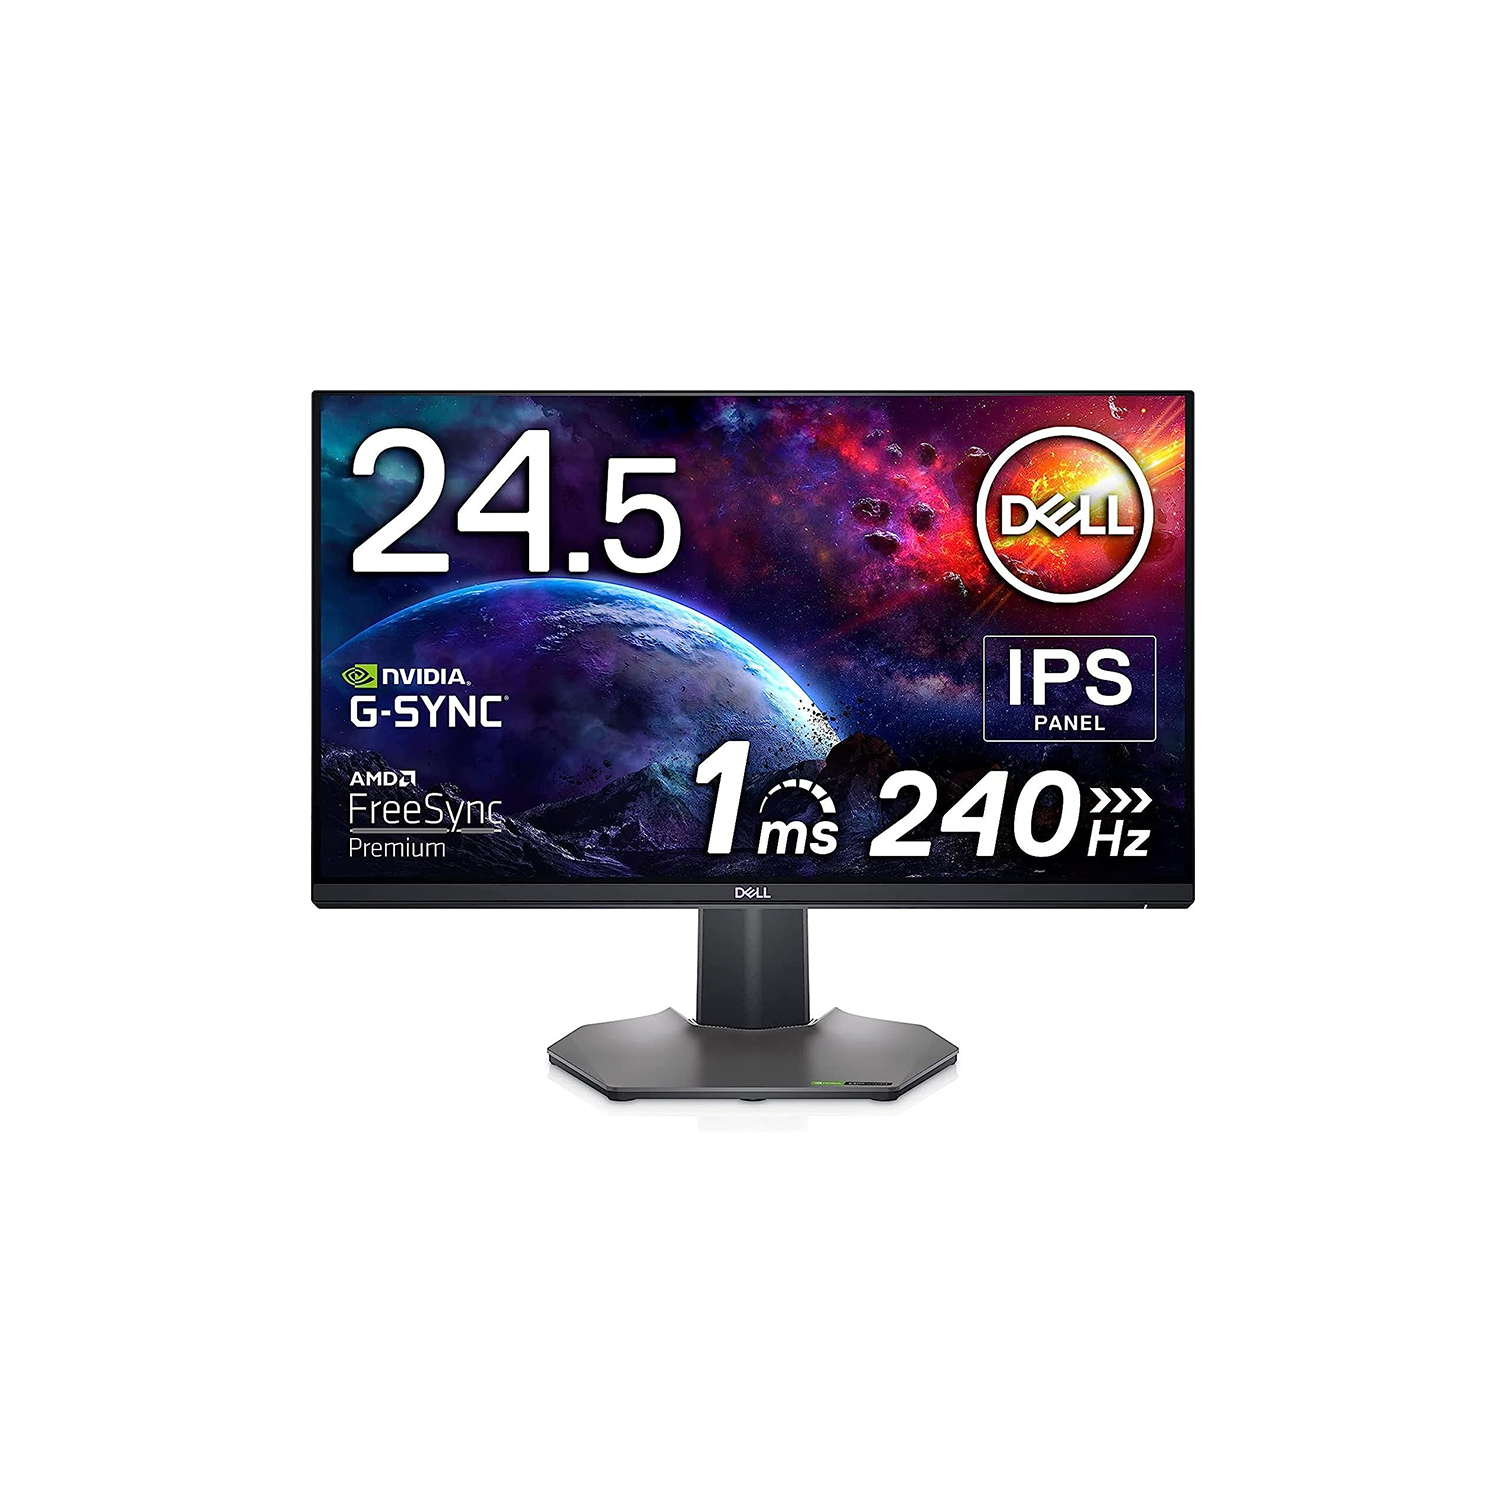 Dell 240Hz Gaming Monitor 24.5 Inch Full HD Monitor with IPS Technology, Antiglare Screen, Dark Metallic Grey - S2522HG